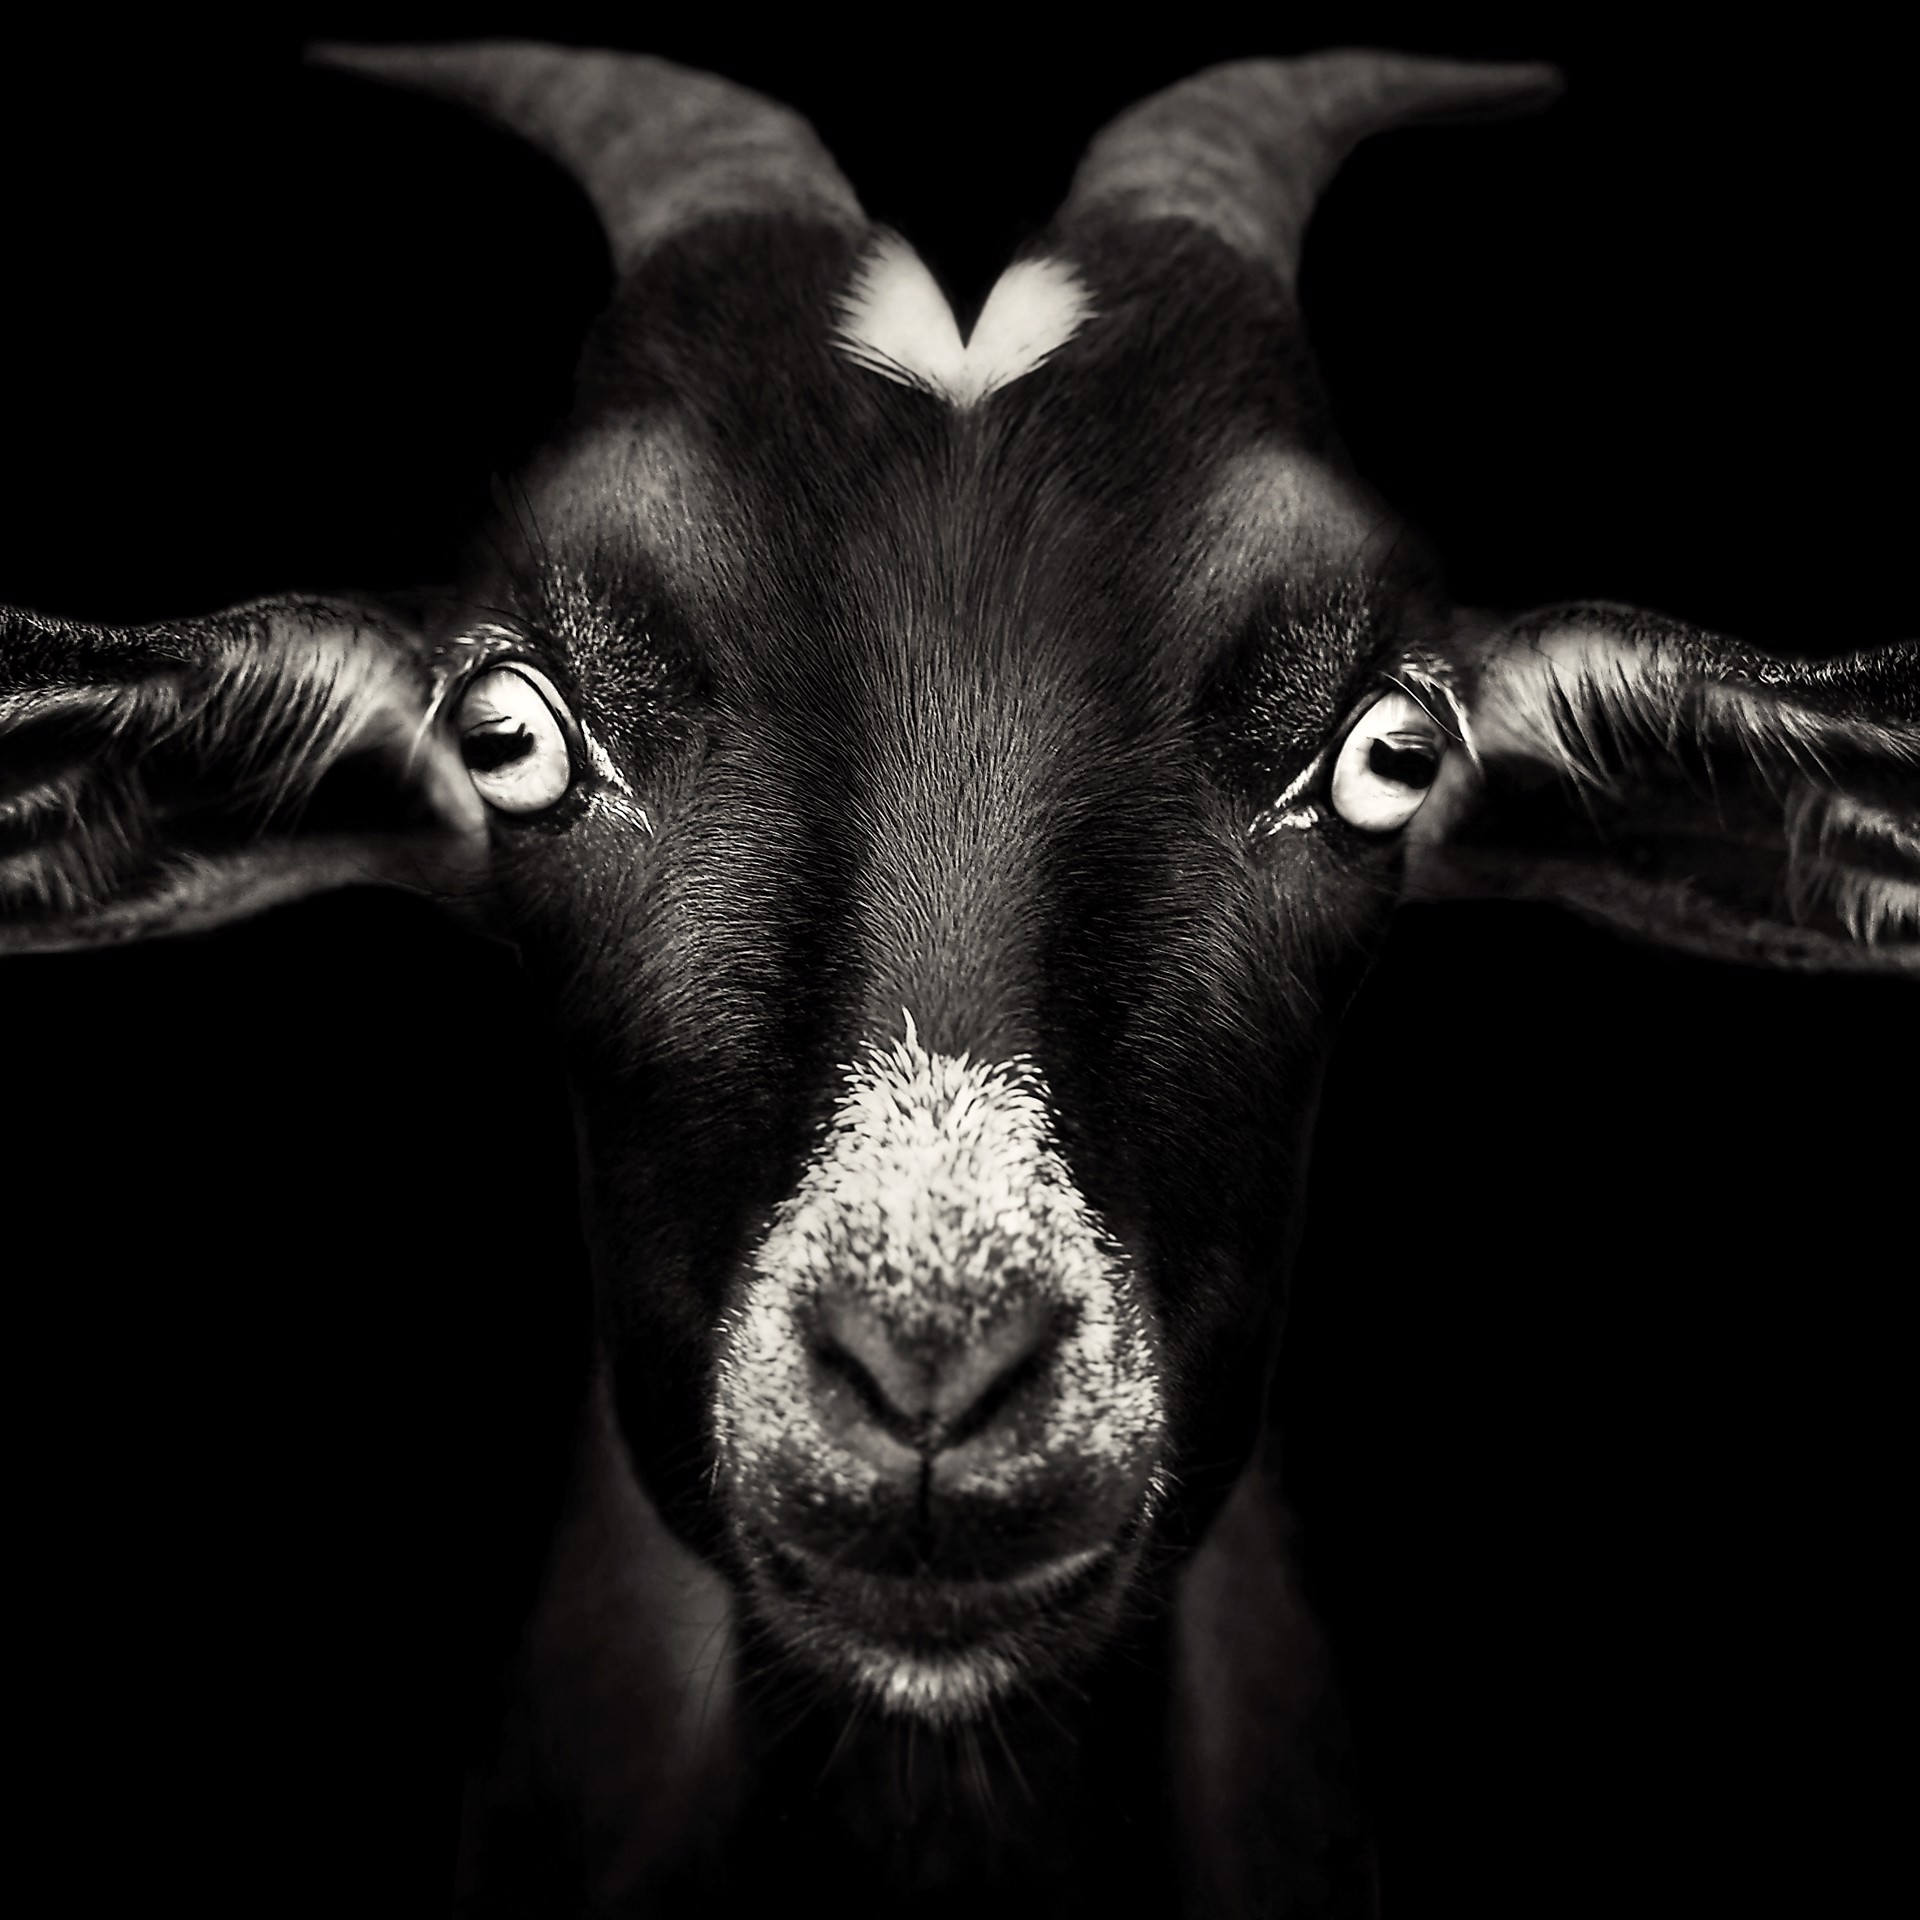 Portrait of a Billy Goat by Lauren Chambers